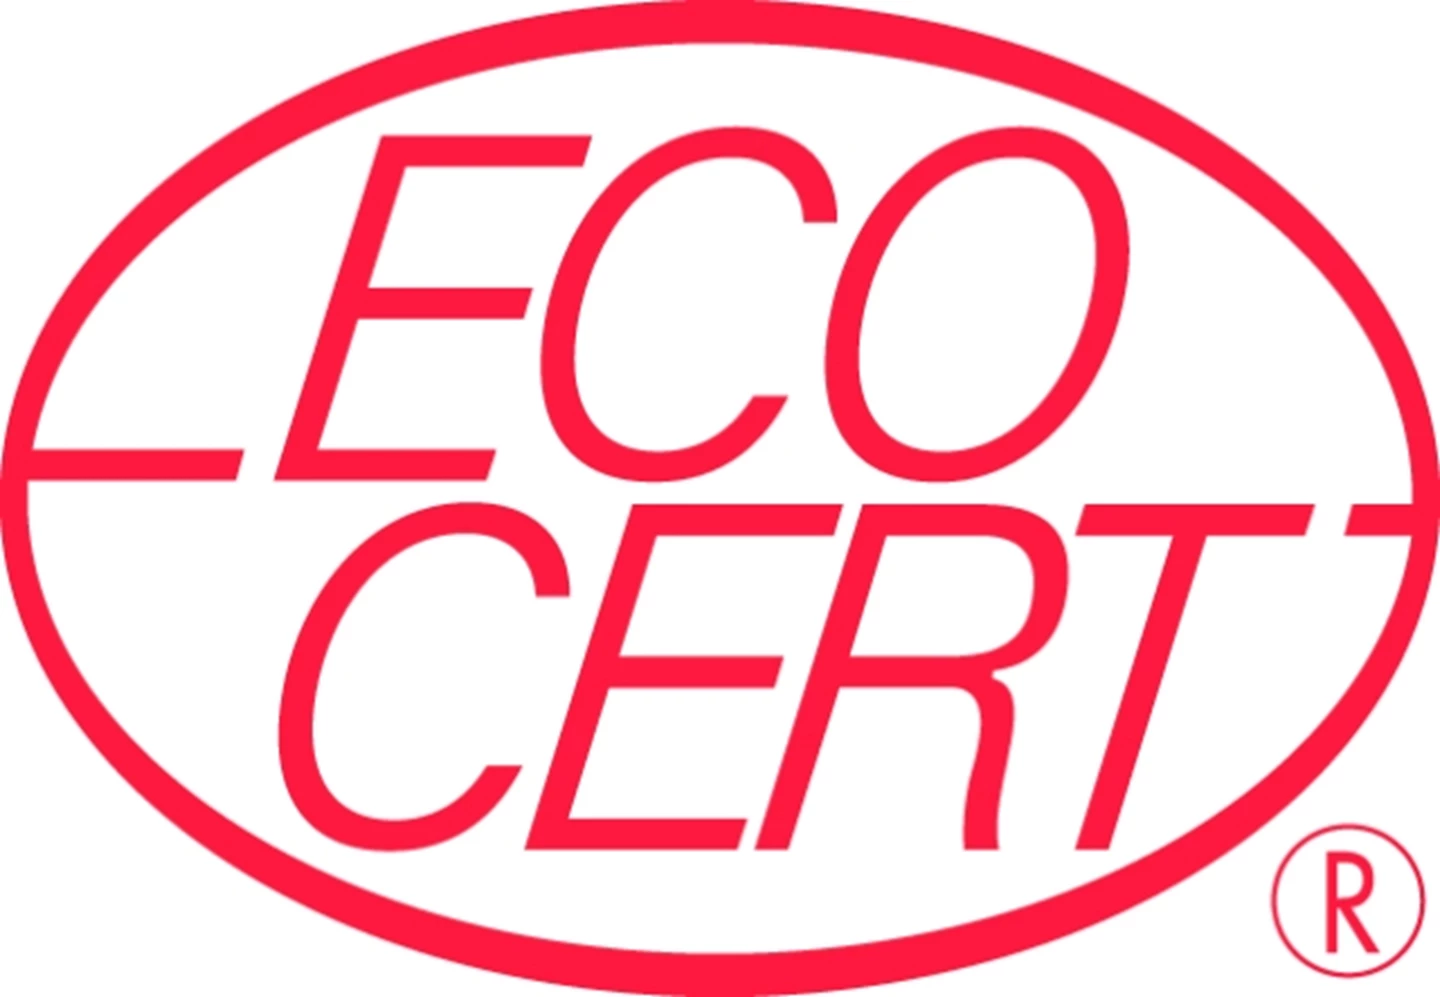 Organic_Ecocert-logo